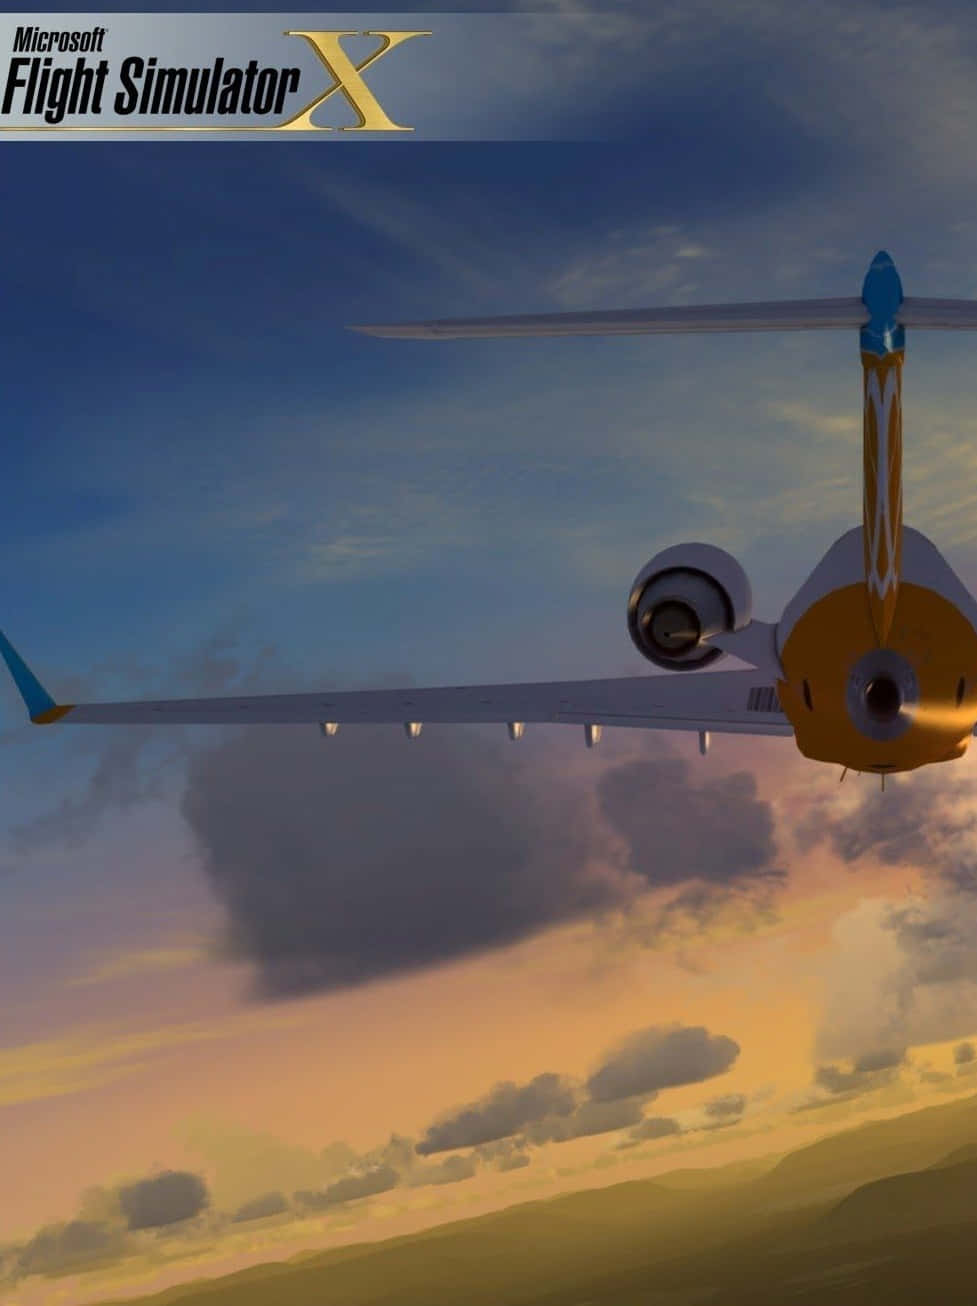 '¡laaventura Te Espera En Android Microsoft Flight Simulator!'